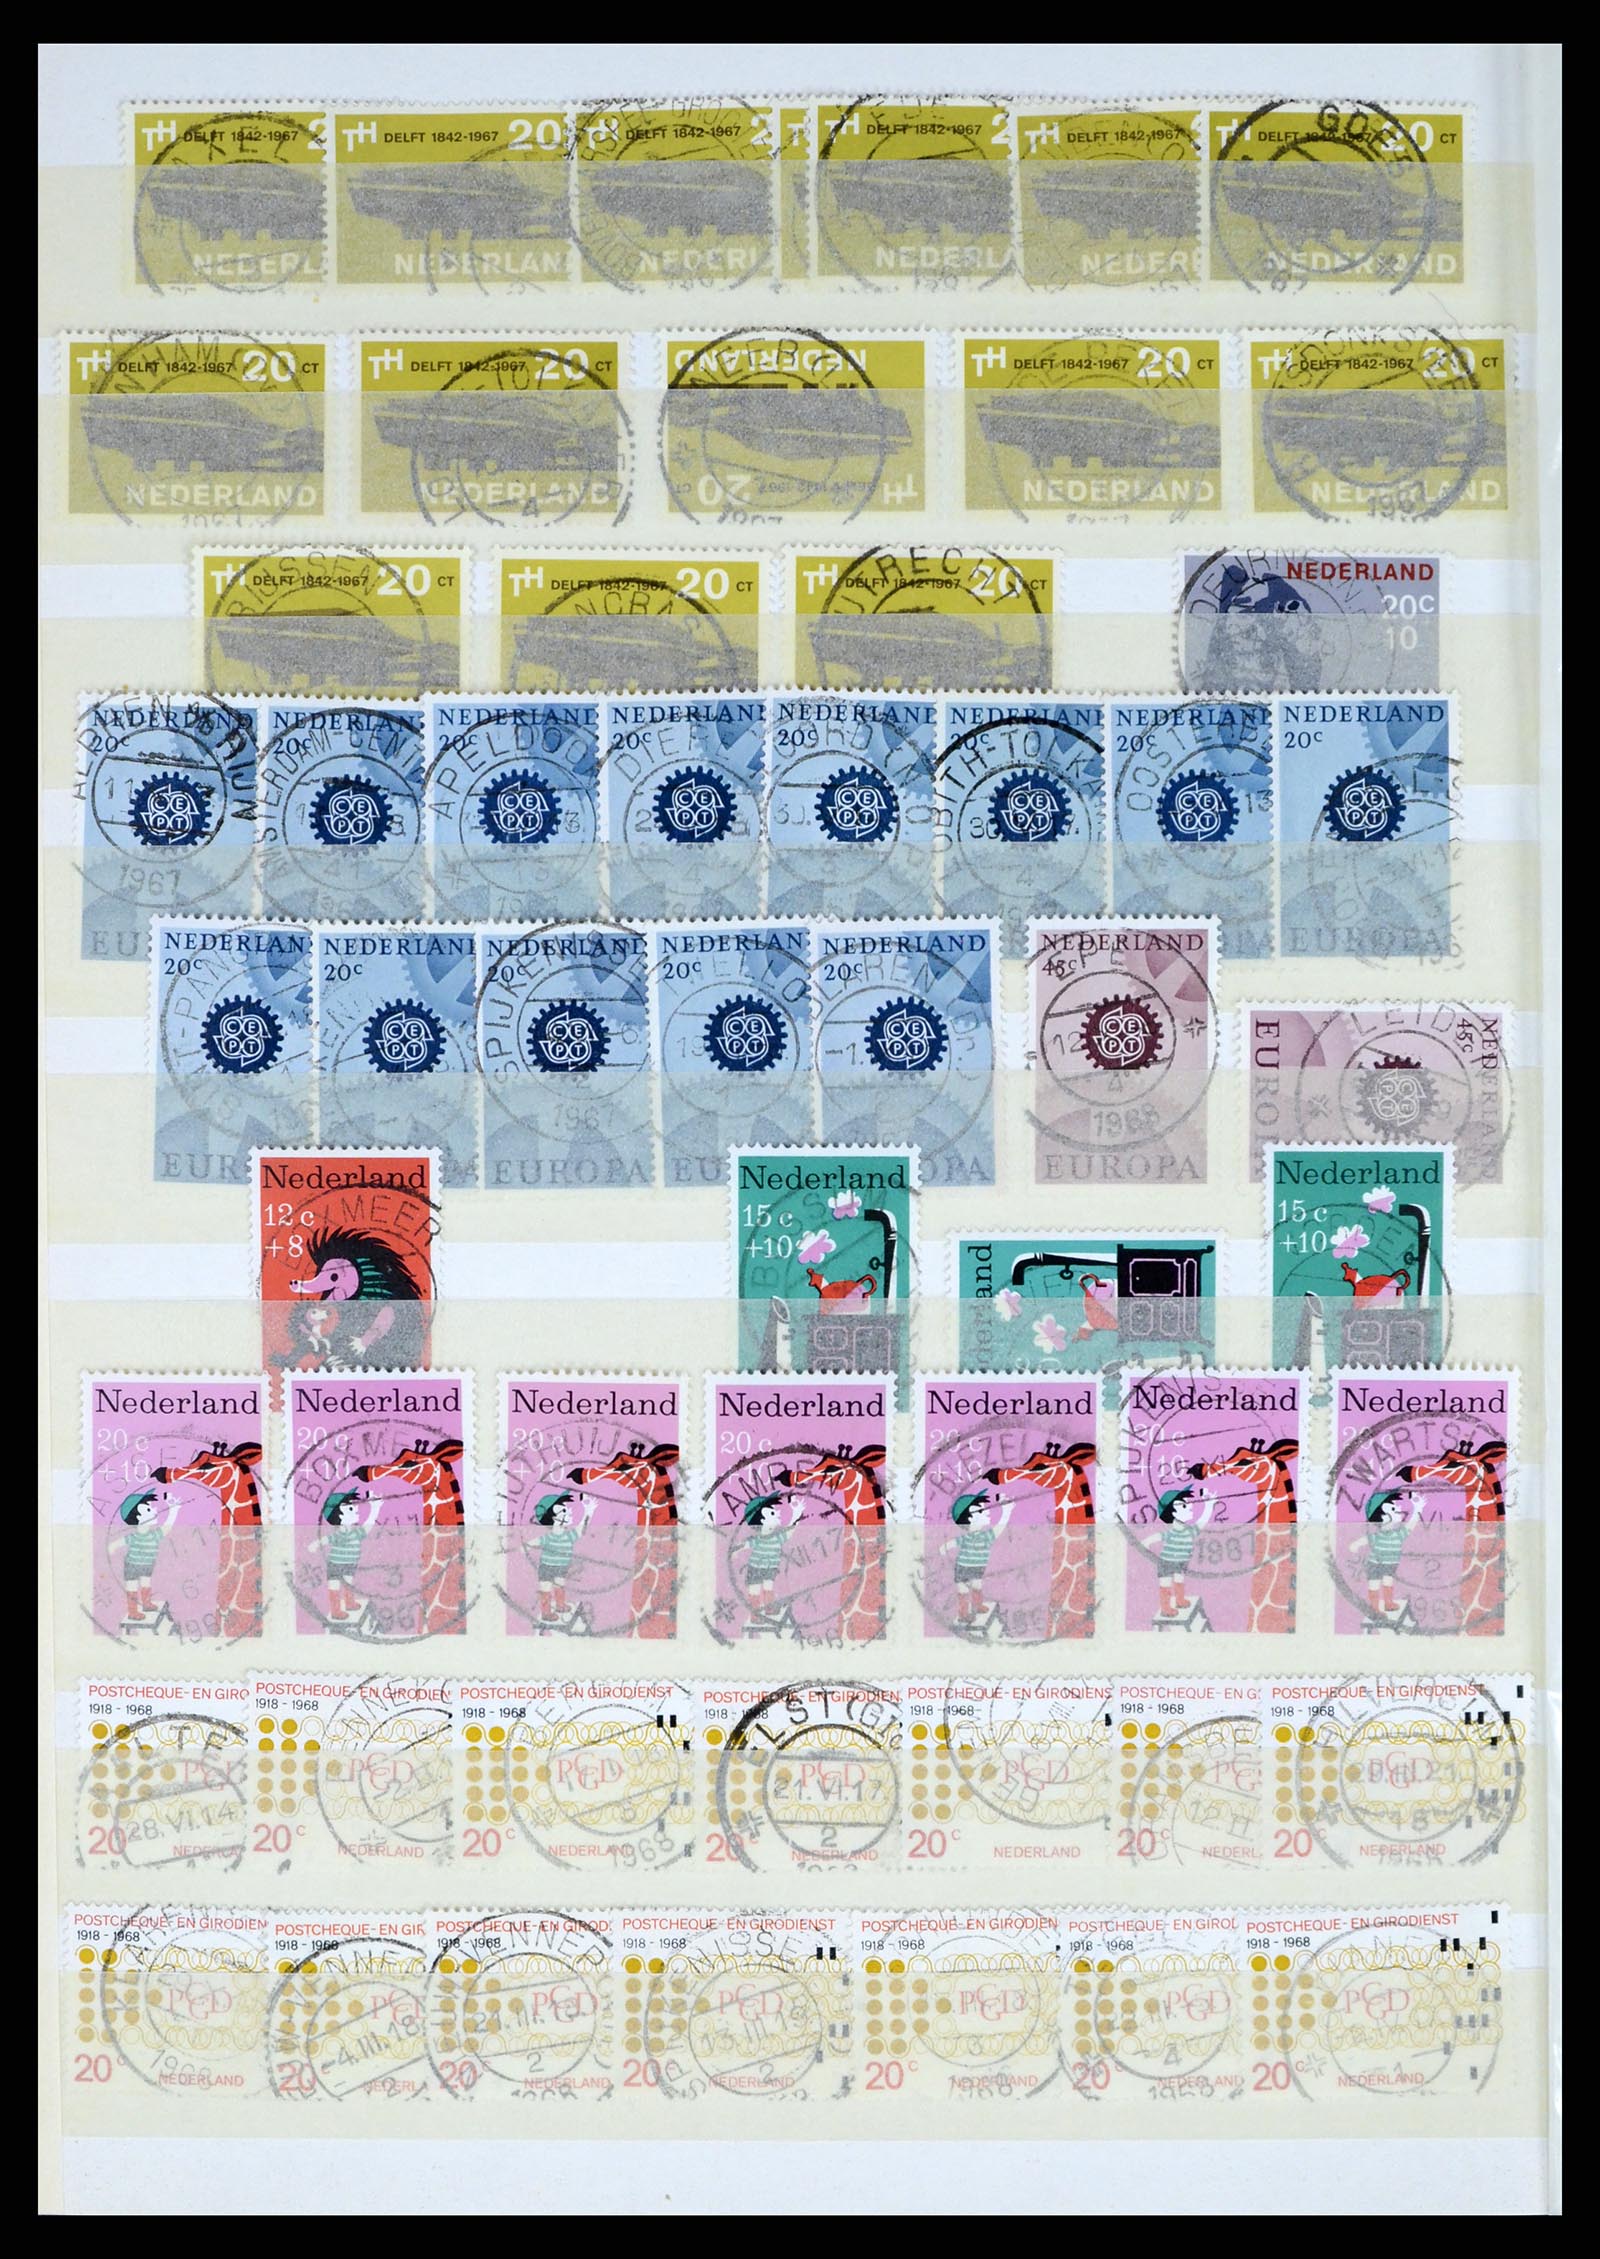 37424 060 - Stamp collection 37424 Netherlands shortbar cancels.